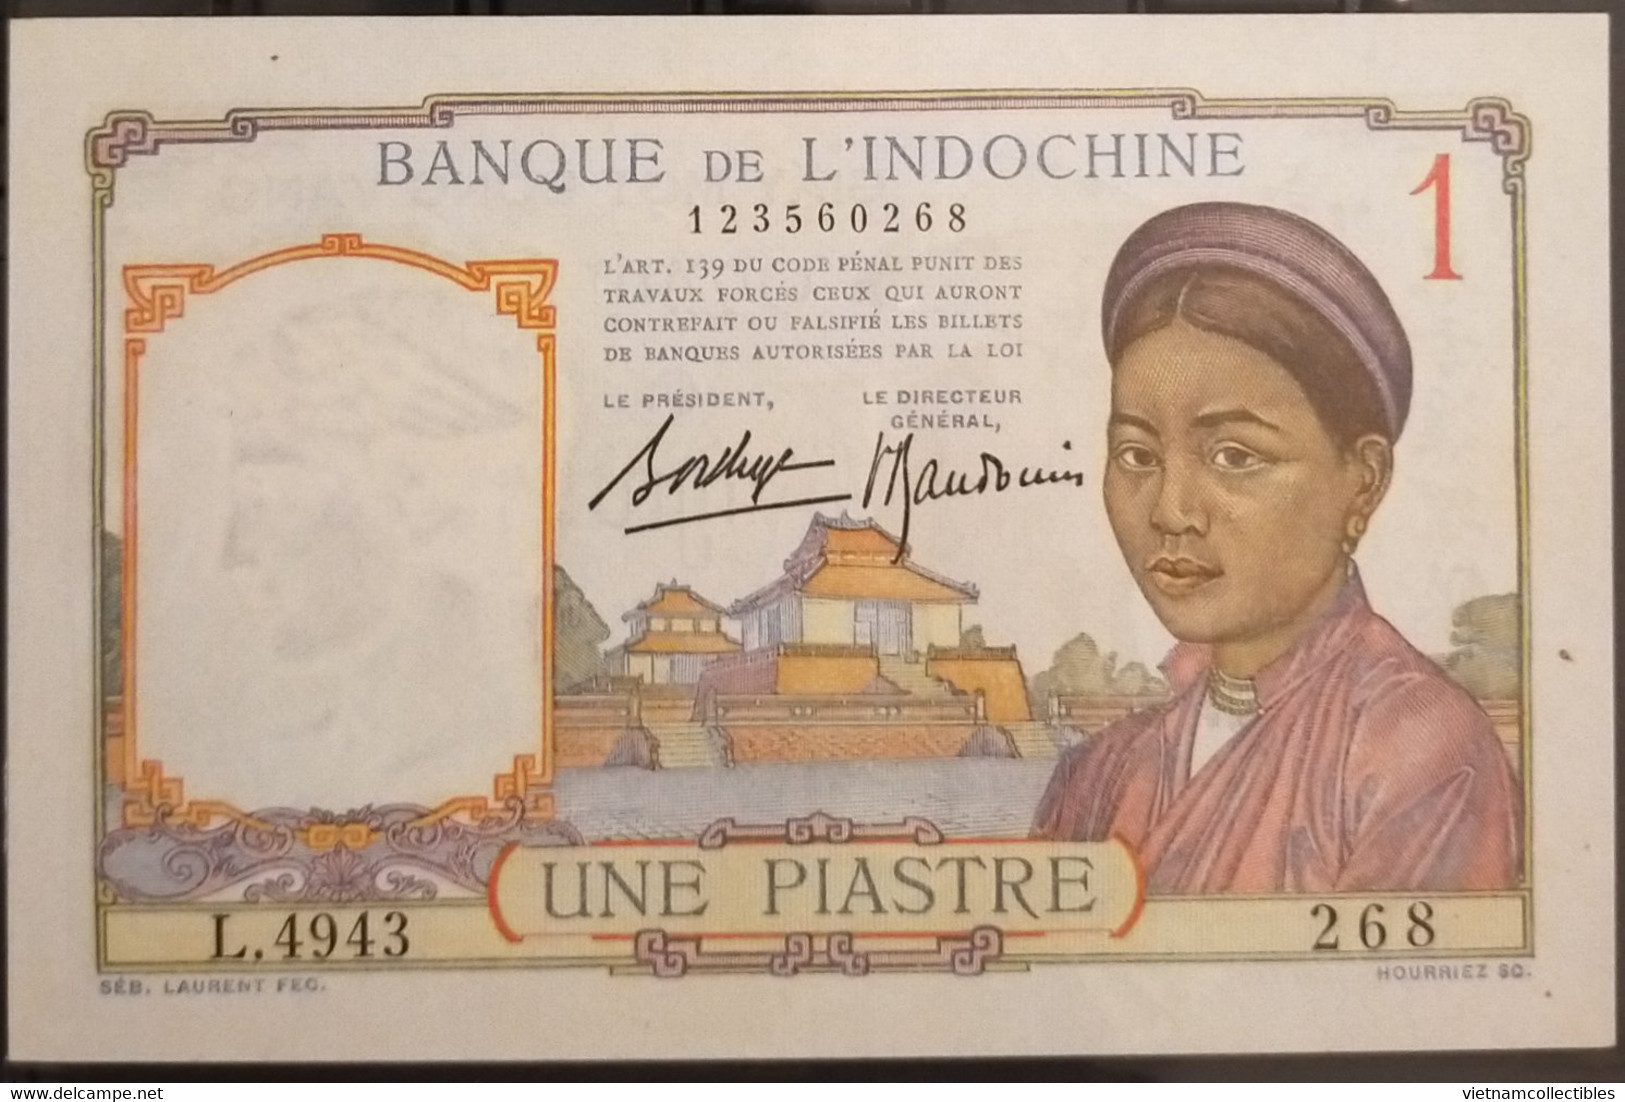 French Indochina Indo China Indochine Vietnam Cambodia 1 Piastre AU Banknote Note / Billet 1932 - 1949 - Pick # 54b - Indocina